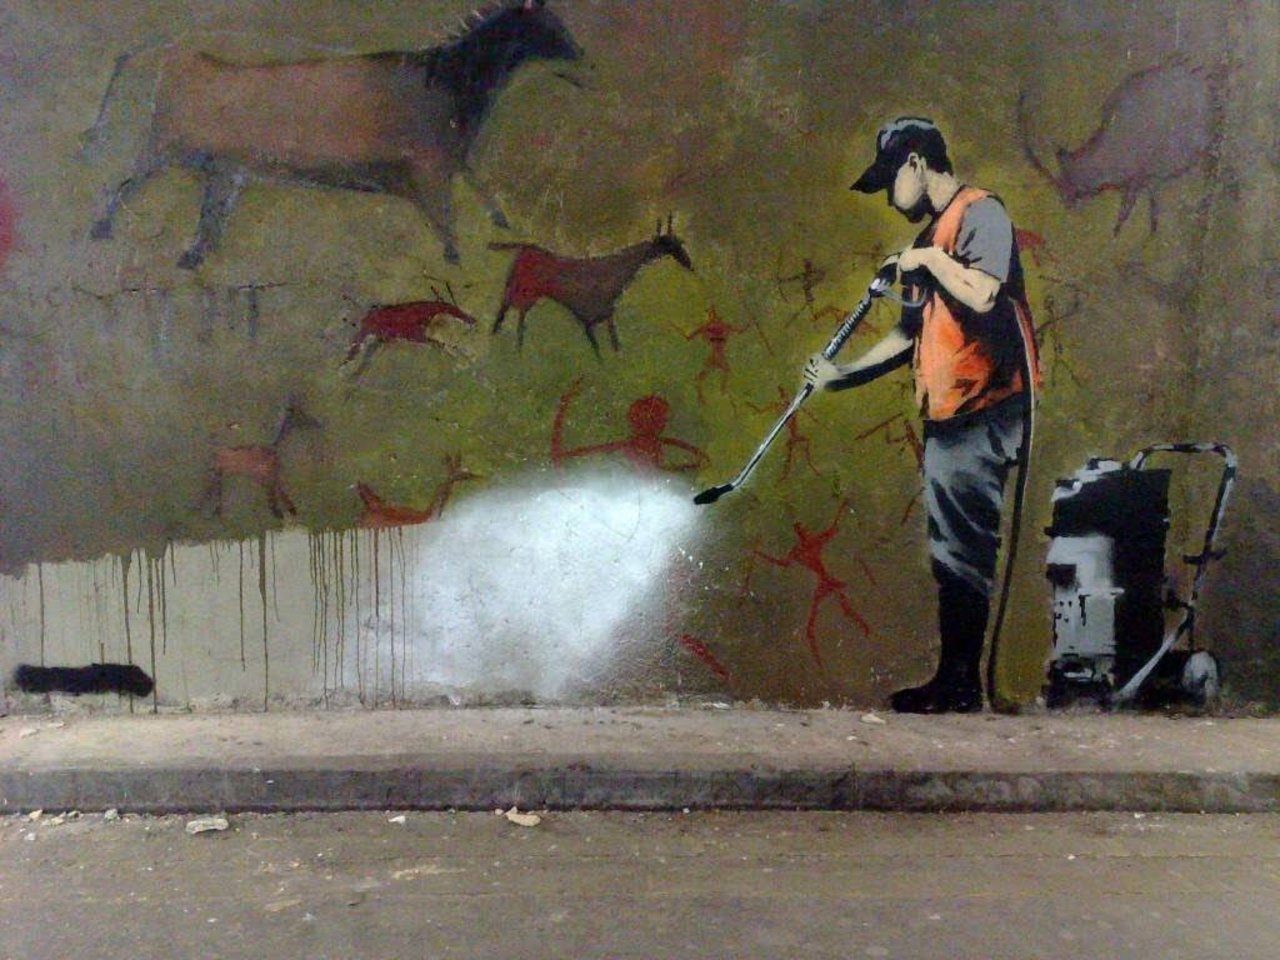 You have got to love the art of Banksy #art #Banksy #England #graffiti https://t.co/EqD0OFhukE